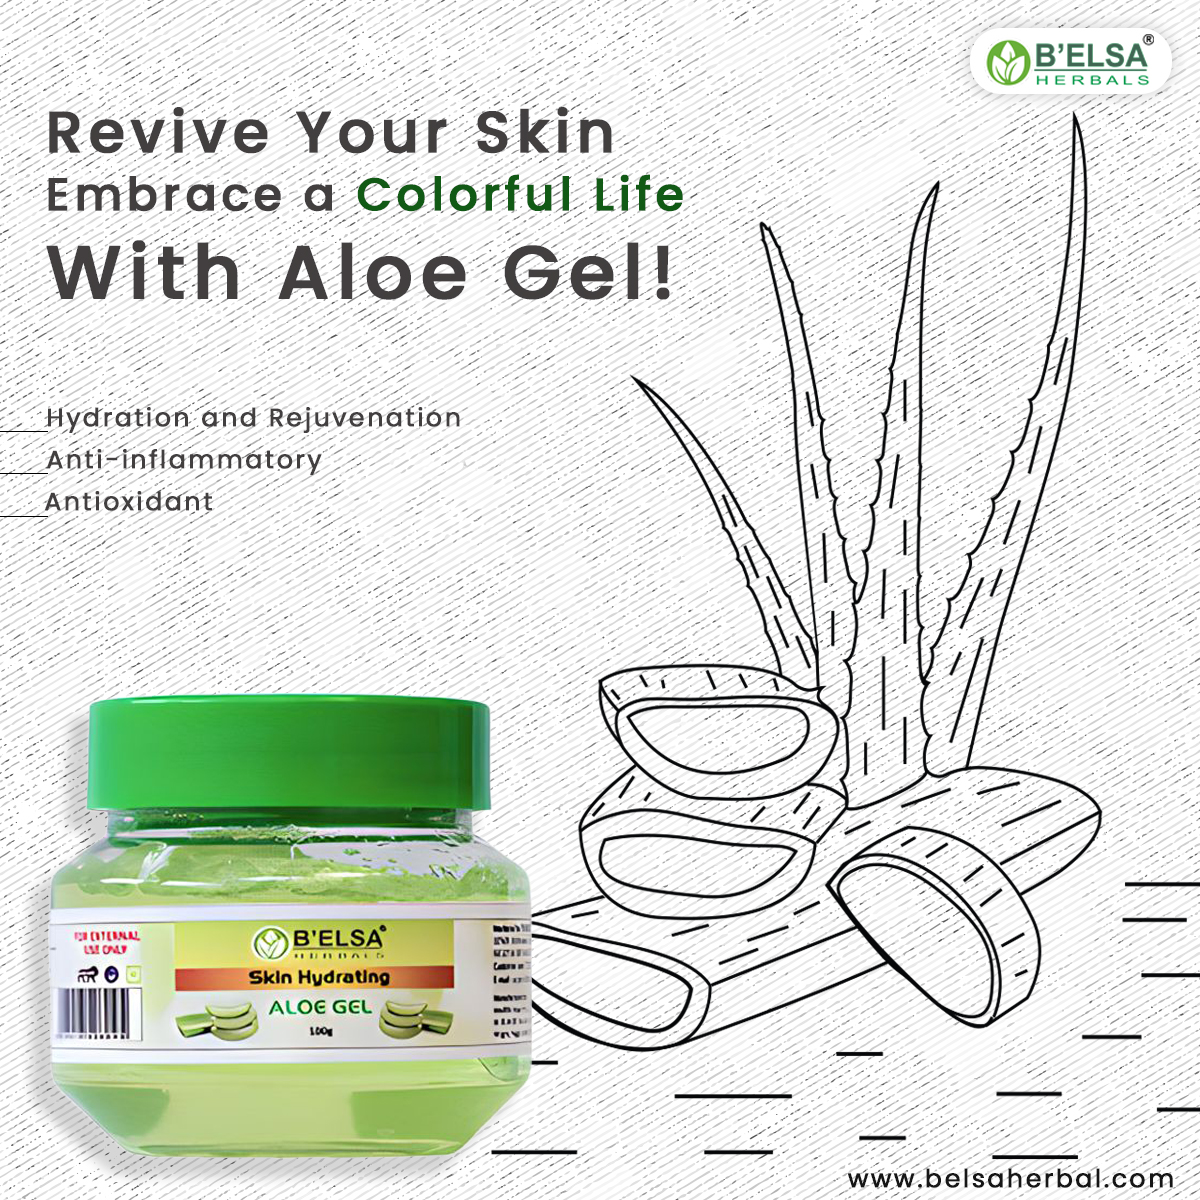 Our Aloe Gel is here to rescue your skin with its soothing and nourishing properties.

#belsa #cosmetics #herbal #AloeGel
#skincareformen 
#SkinCareEssentials
#GlowingSkin
#NourishingFormula
#SkinHydration
#AloeVeraBenefits
#SkinSoothing
#NagpurBeauty
#HealthySkin
#Nagpur